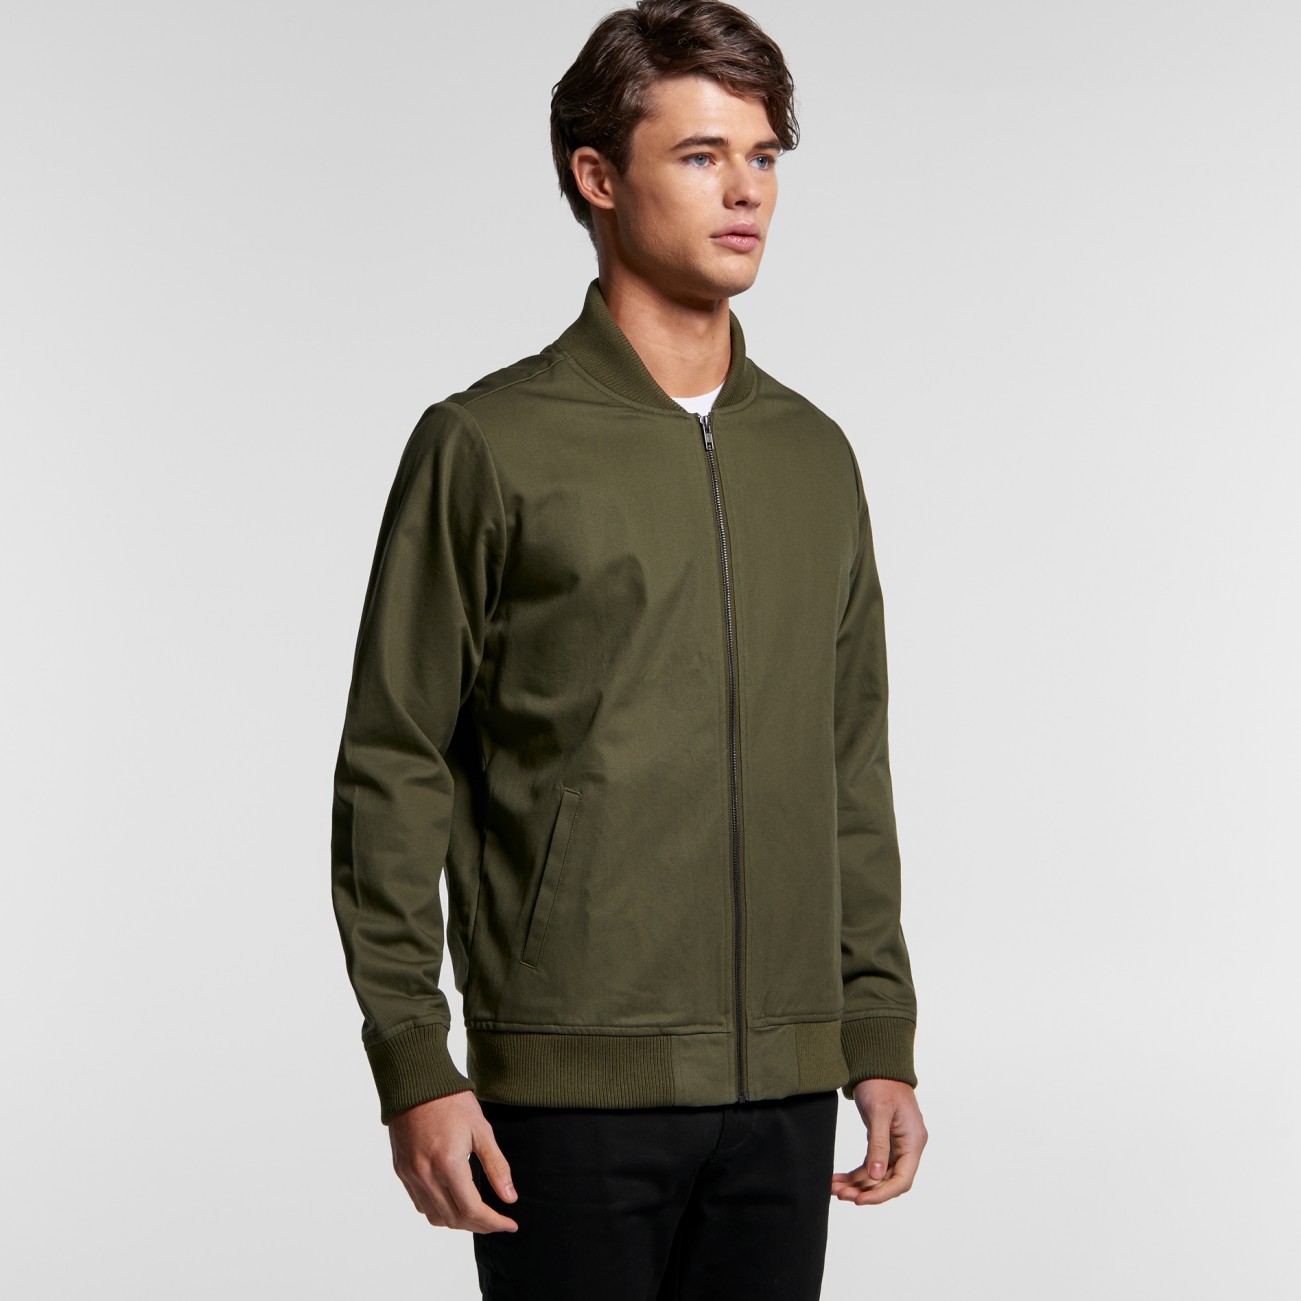 AS Colour Bomber jacket 5520